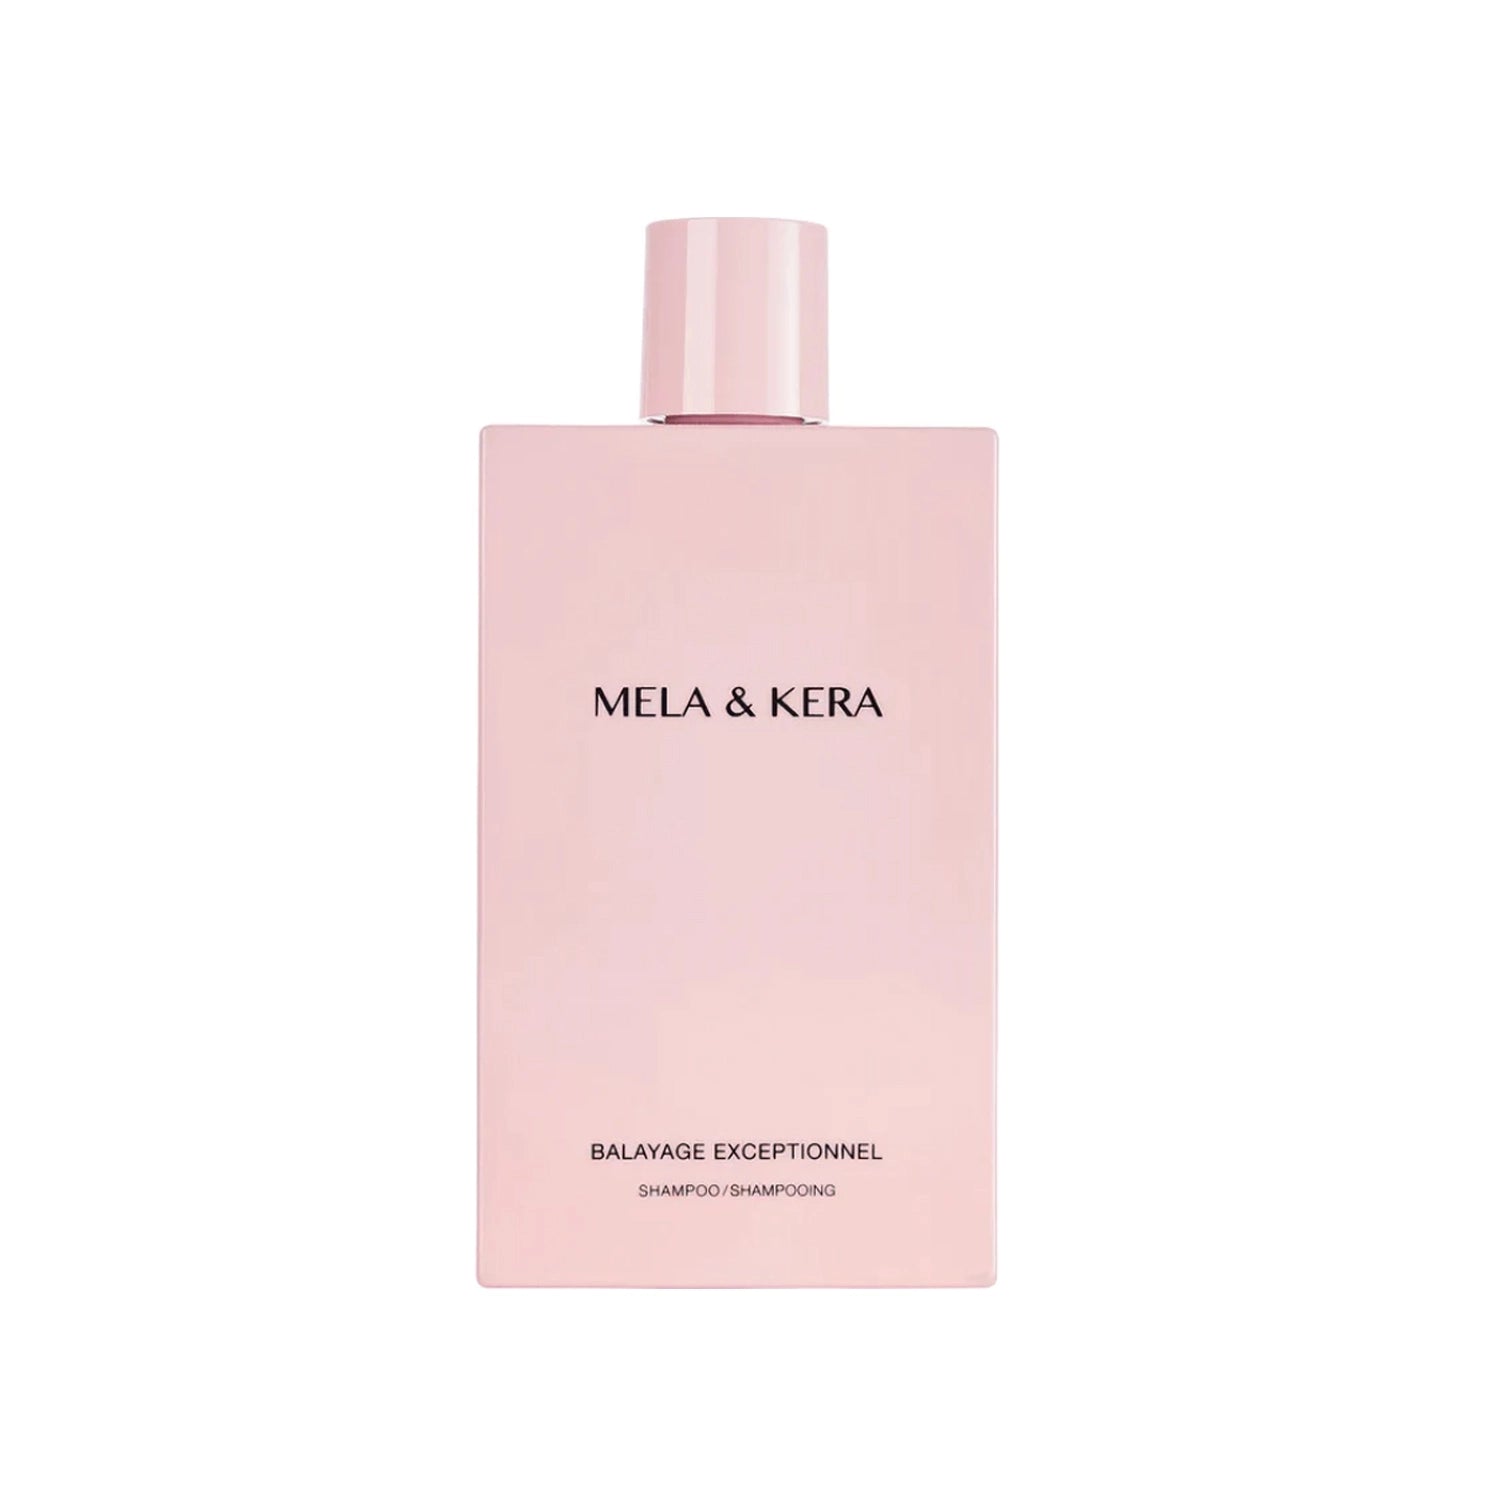 Mela & Kera - Balayage exceptionnel shampoo